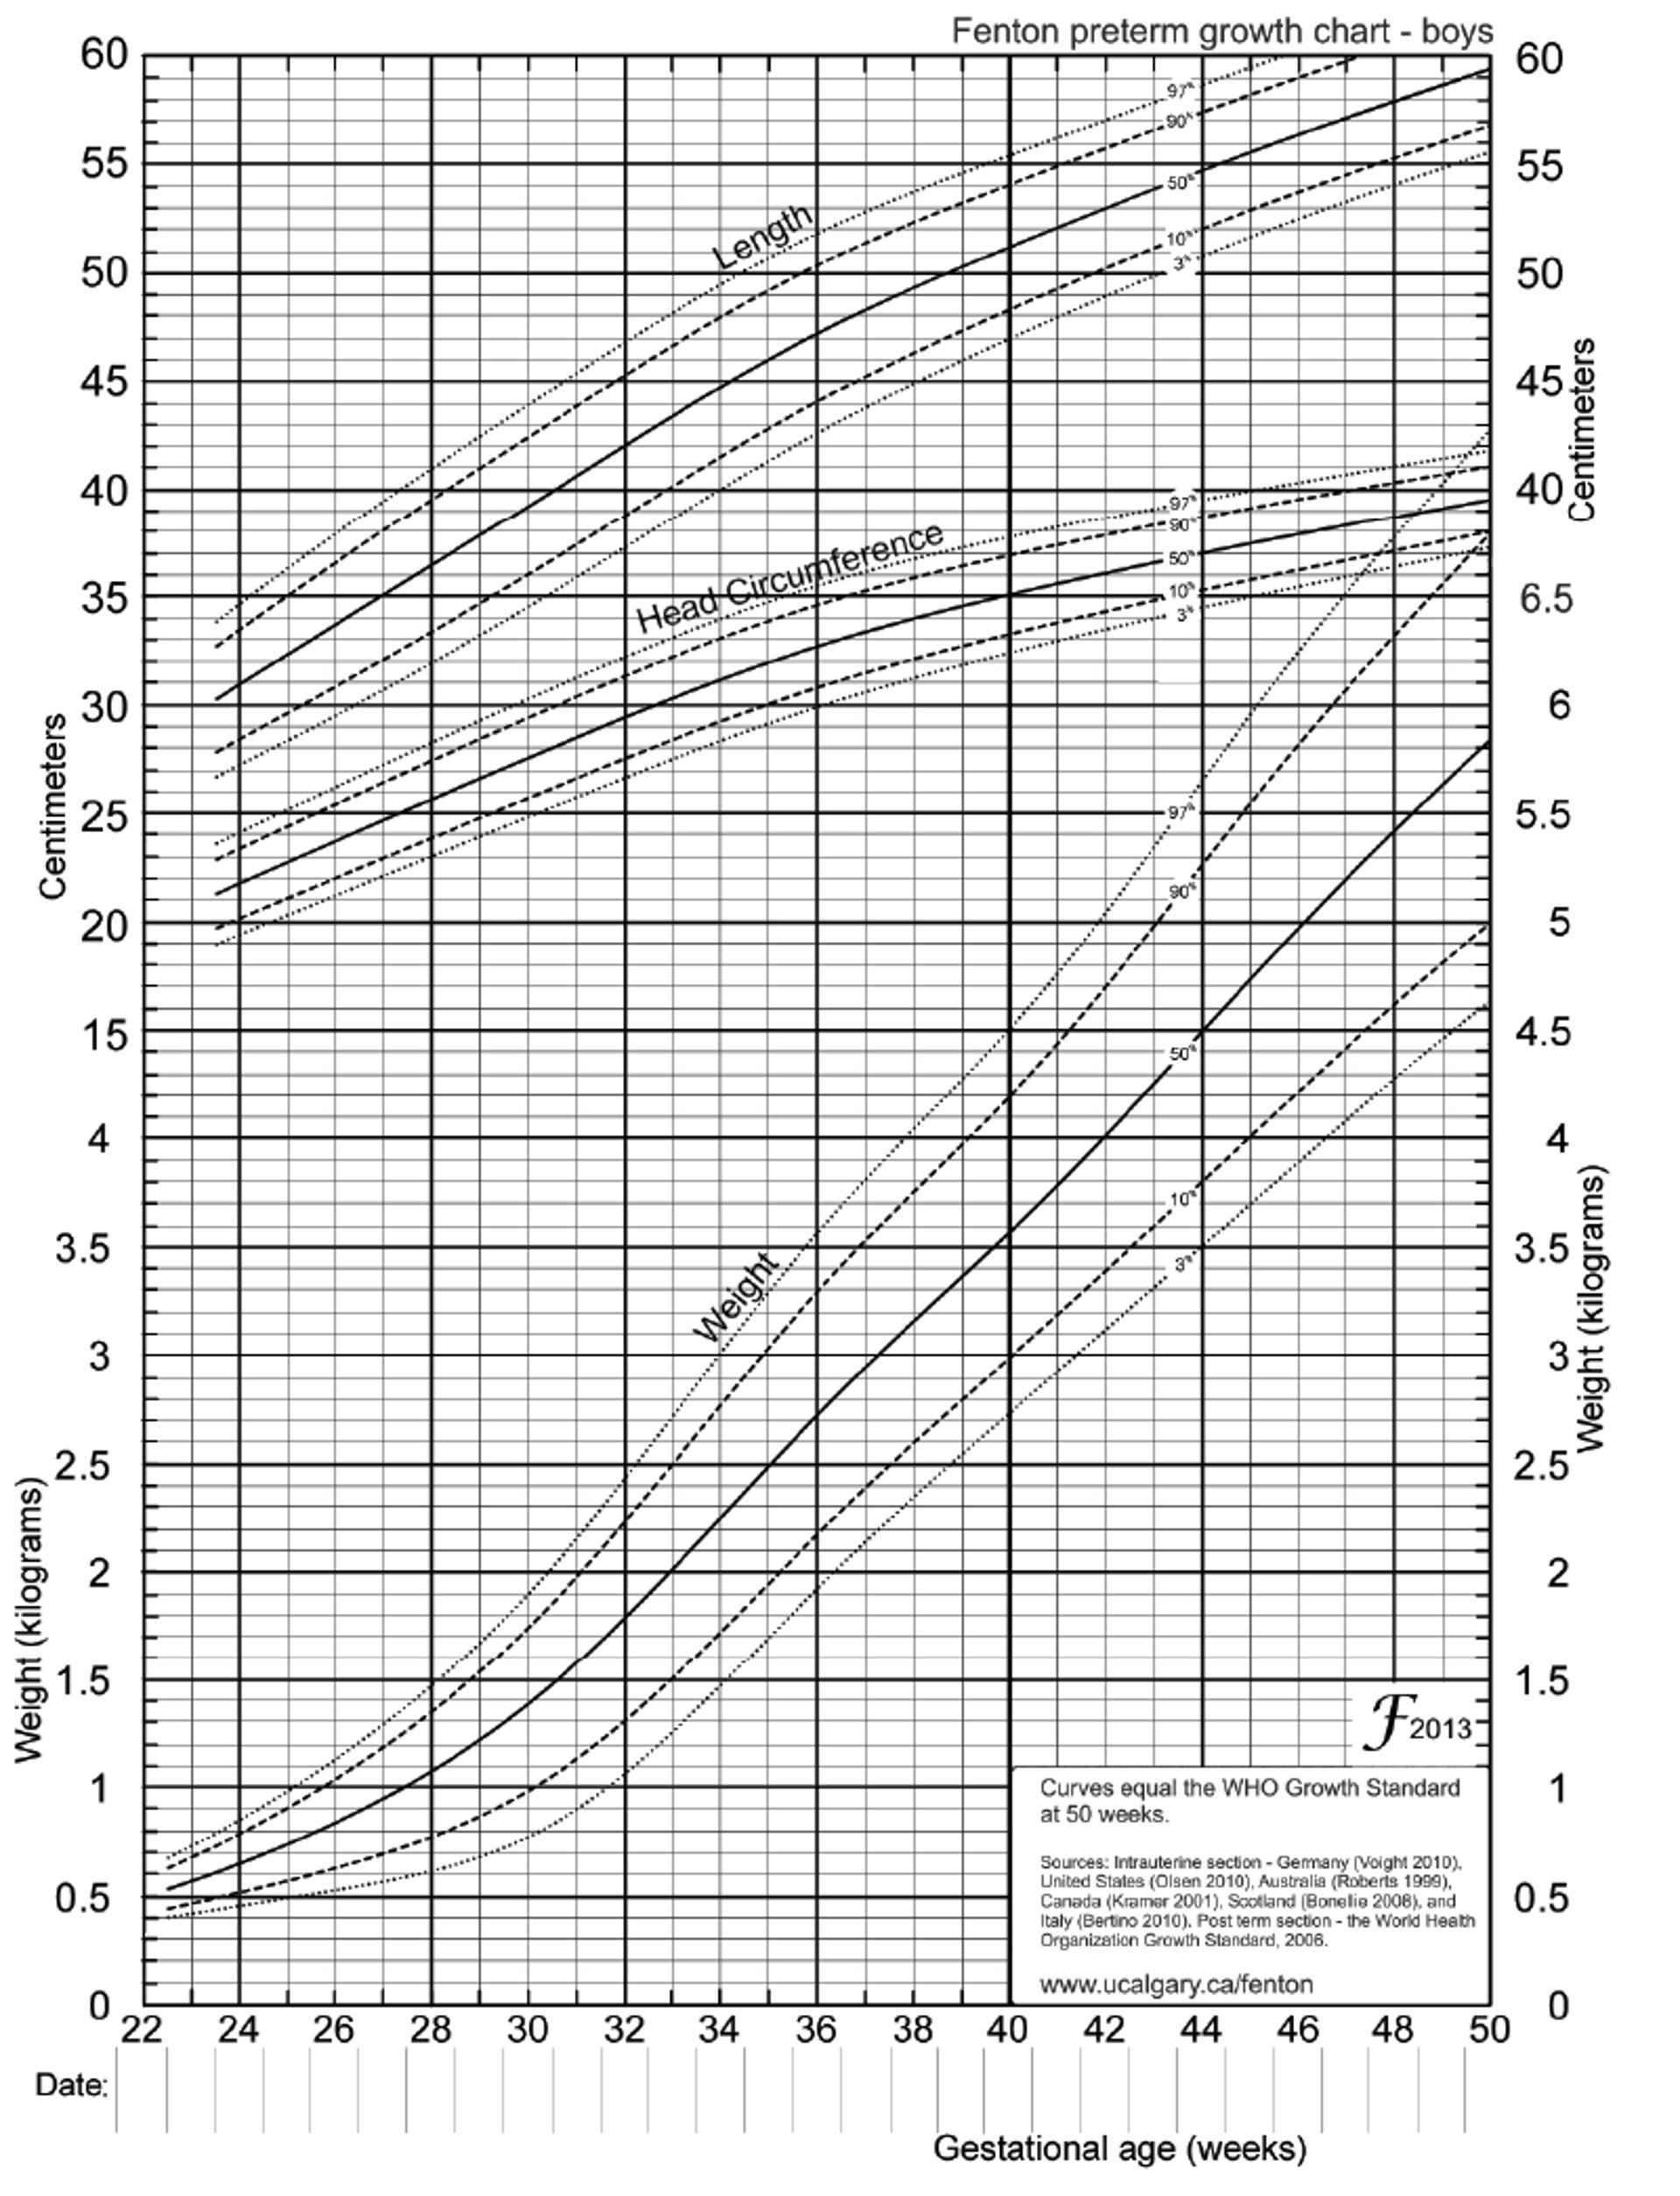 Fenton Growth Chart for Preterm Boys